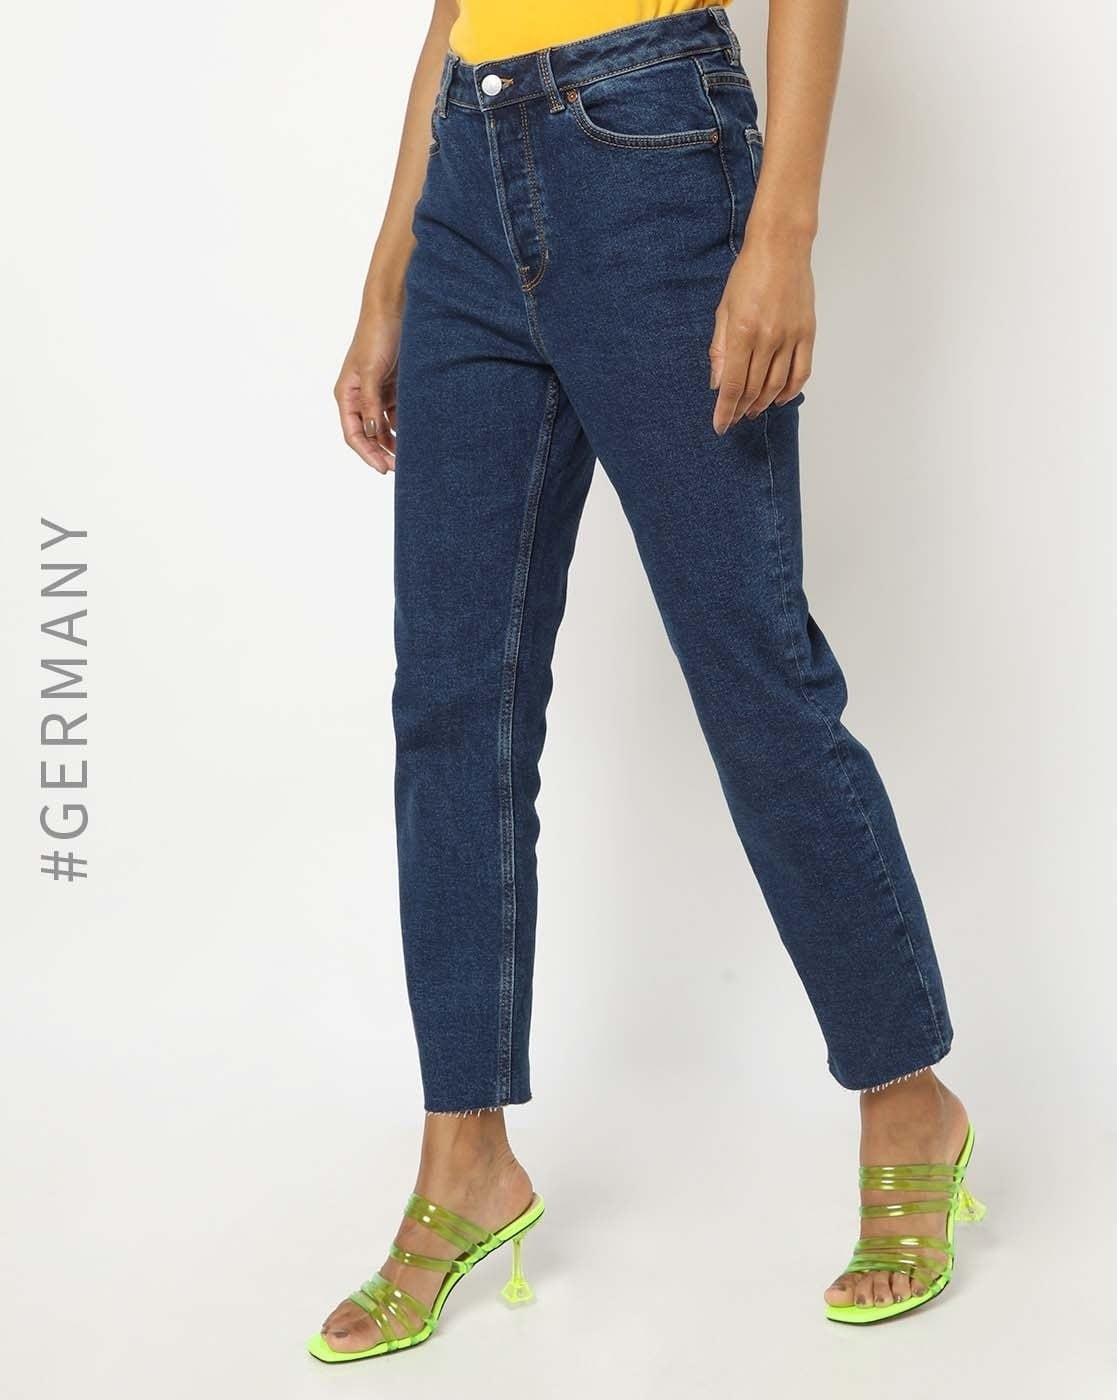 & Jeggings Jeans Blue Online Tailor Buy for by Tom Women